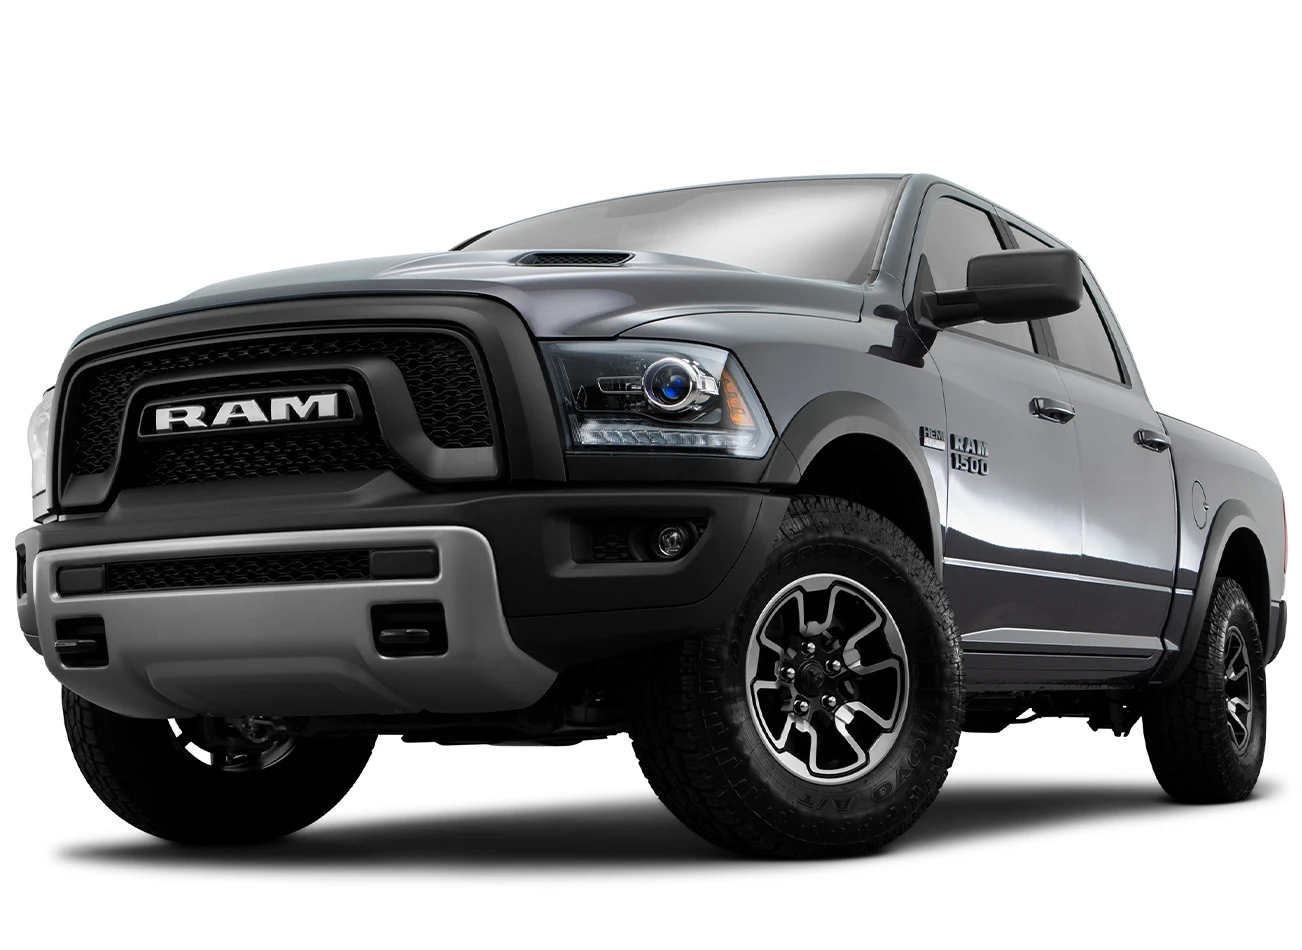 2016 RAM 1500: Exterior Front View | CarMax